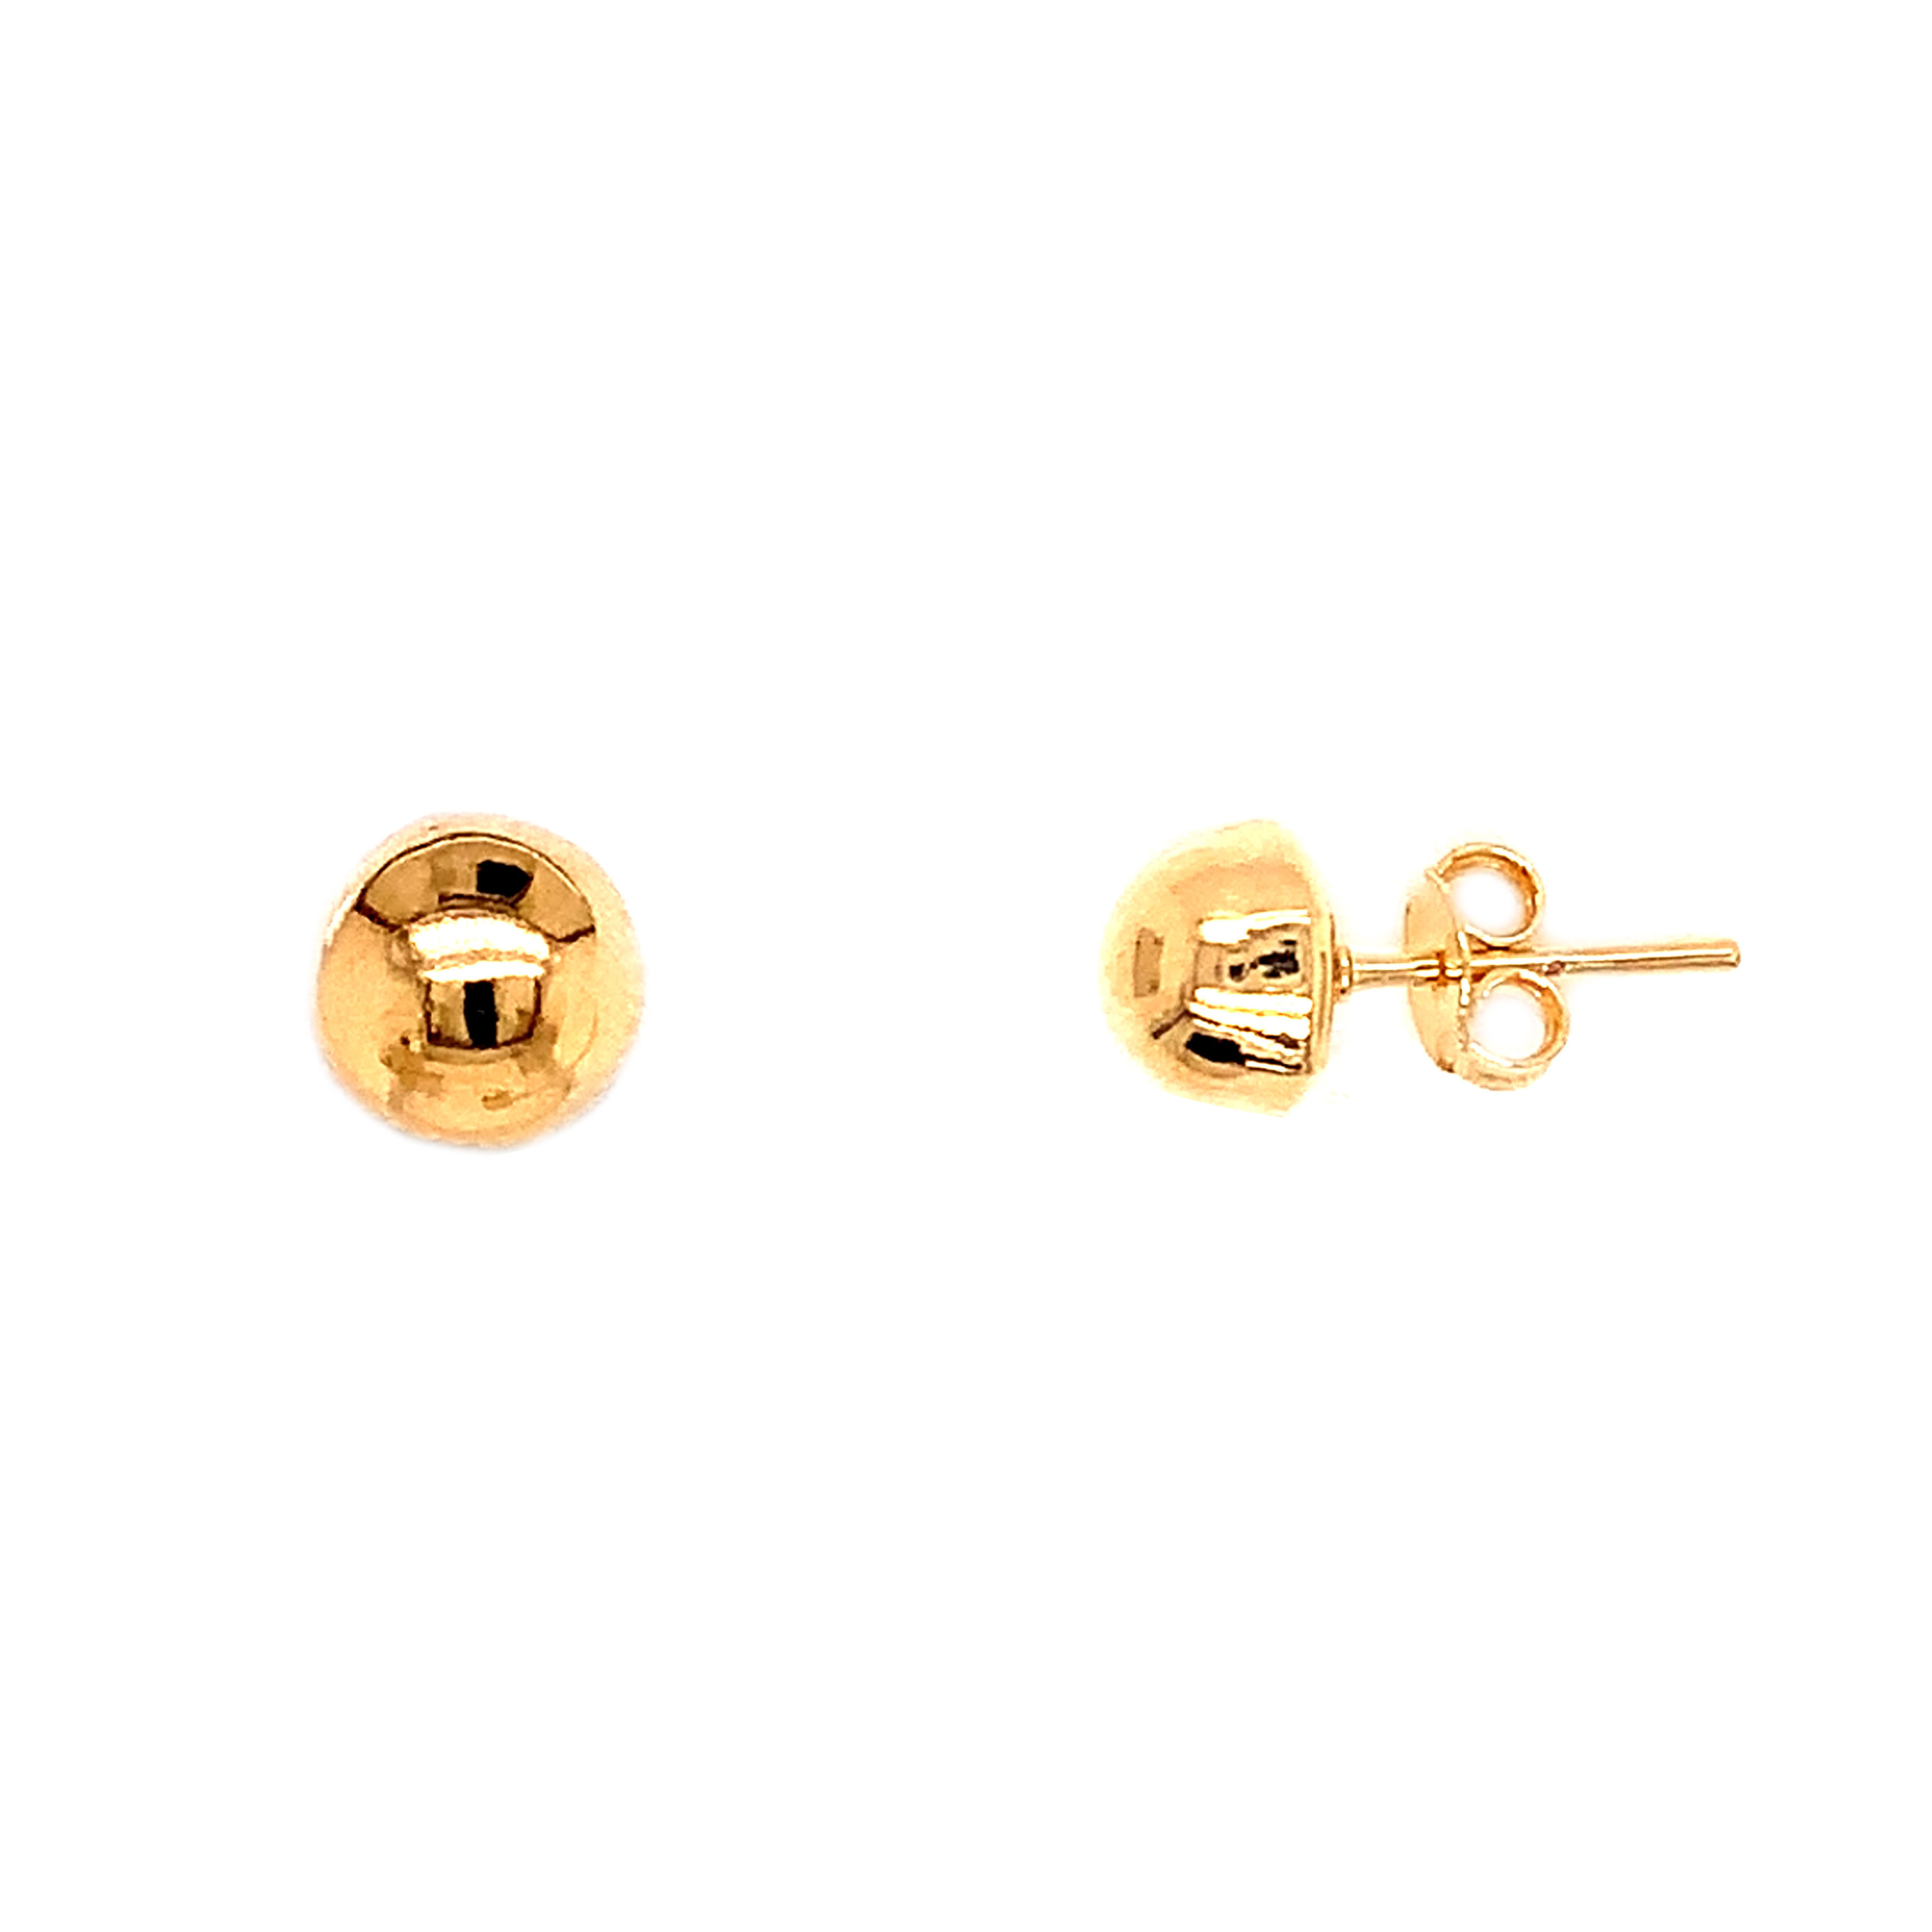 8mm Flatback Stud Earrings - Gold Filled